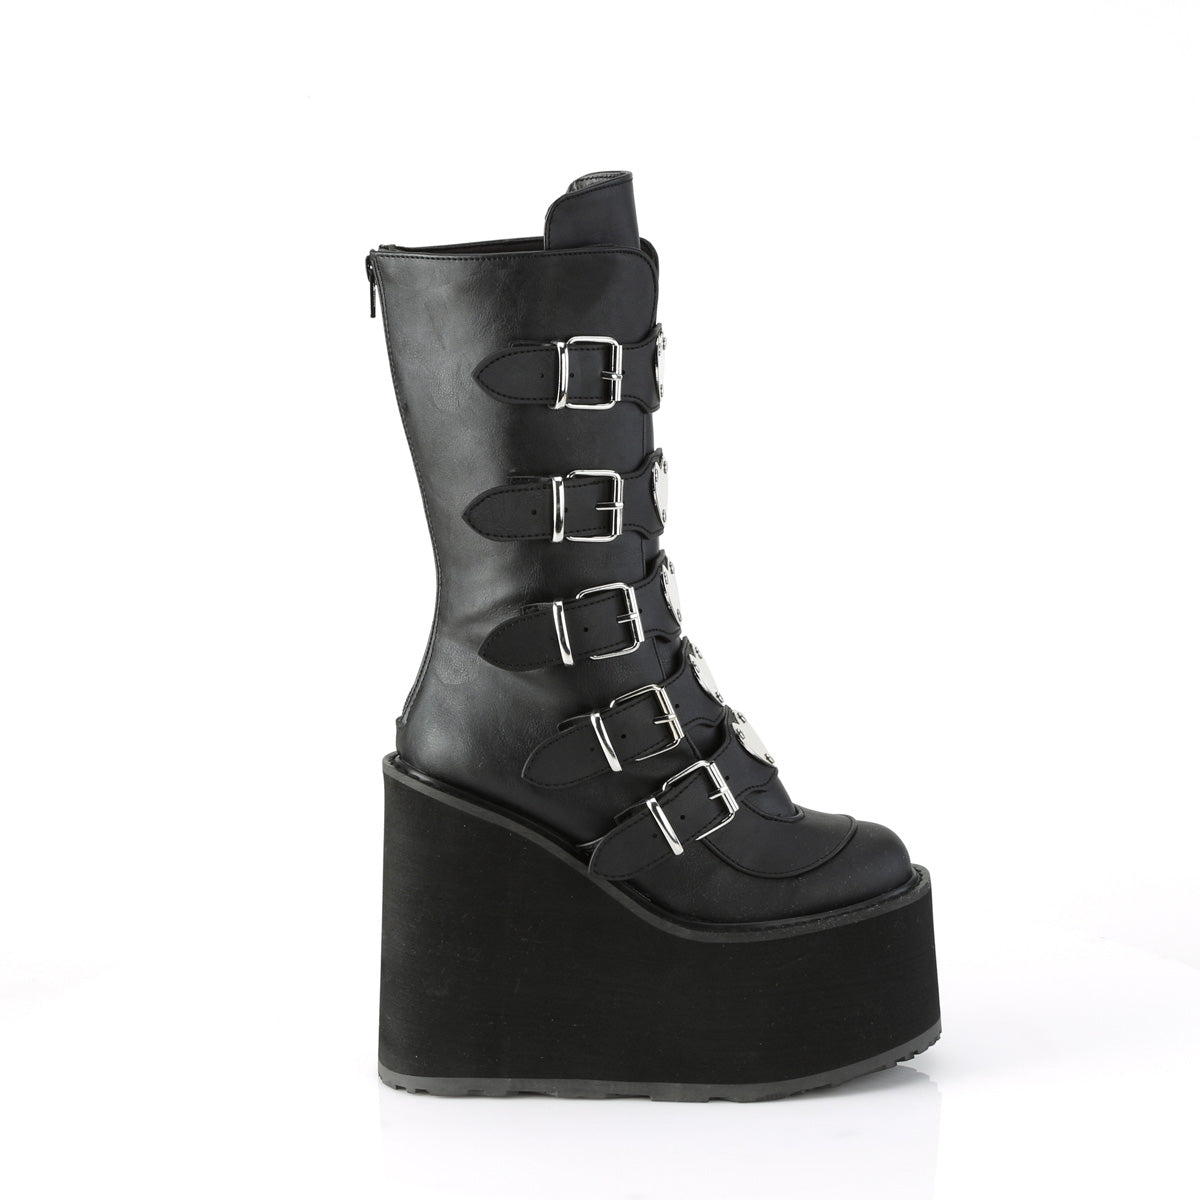 SWING-230 Demonia Black Vegan Leather Women's Mid-Calf & Knee High Boots [Demonia Cult Alternative Footwear]